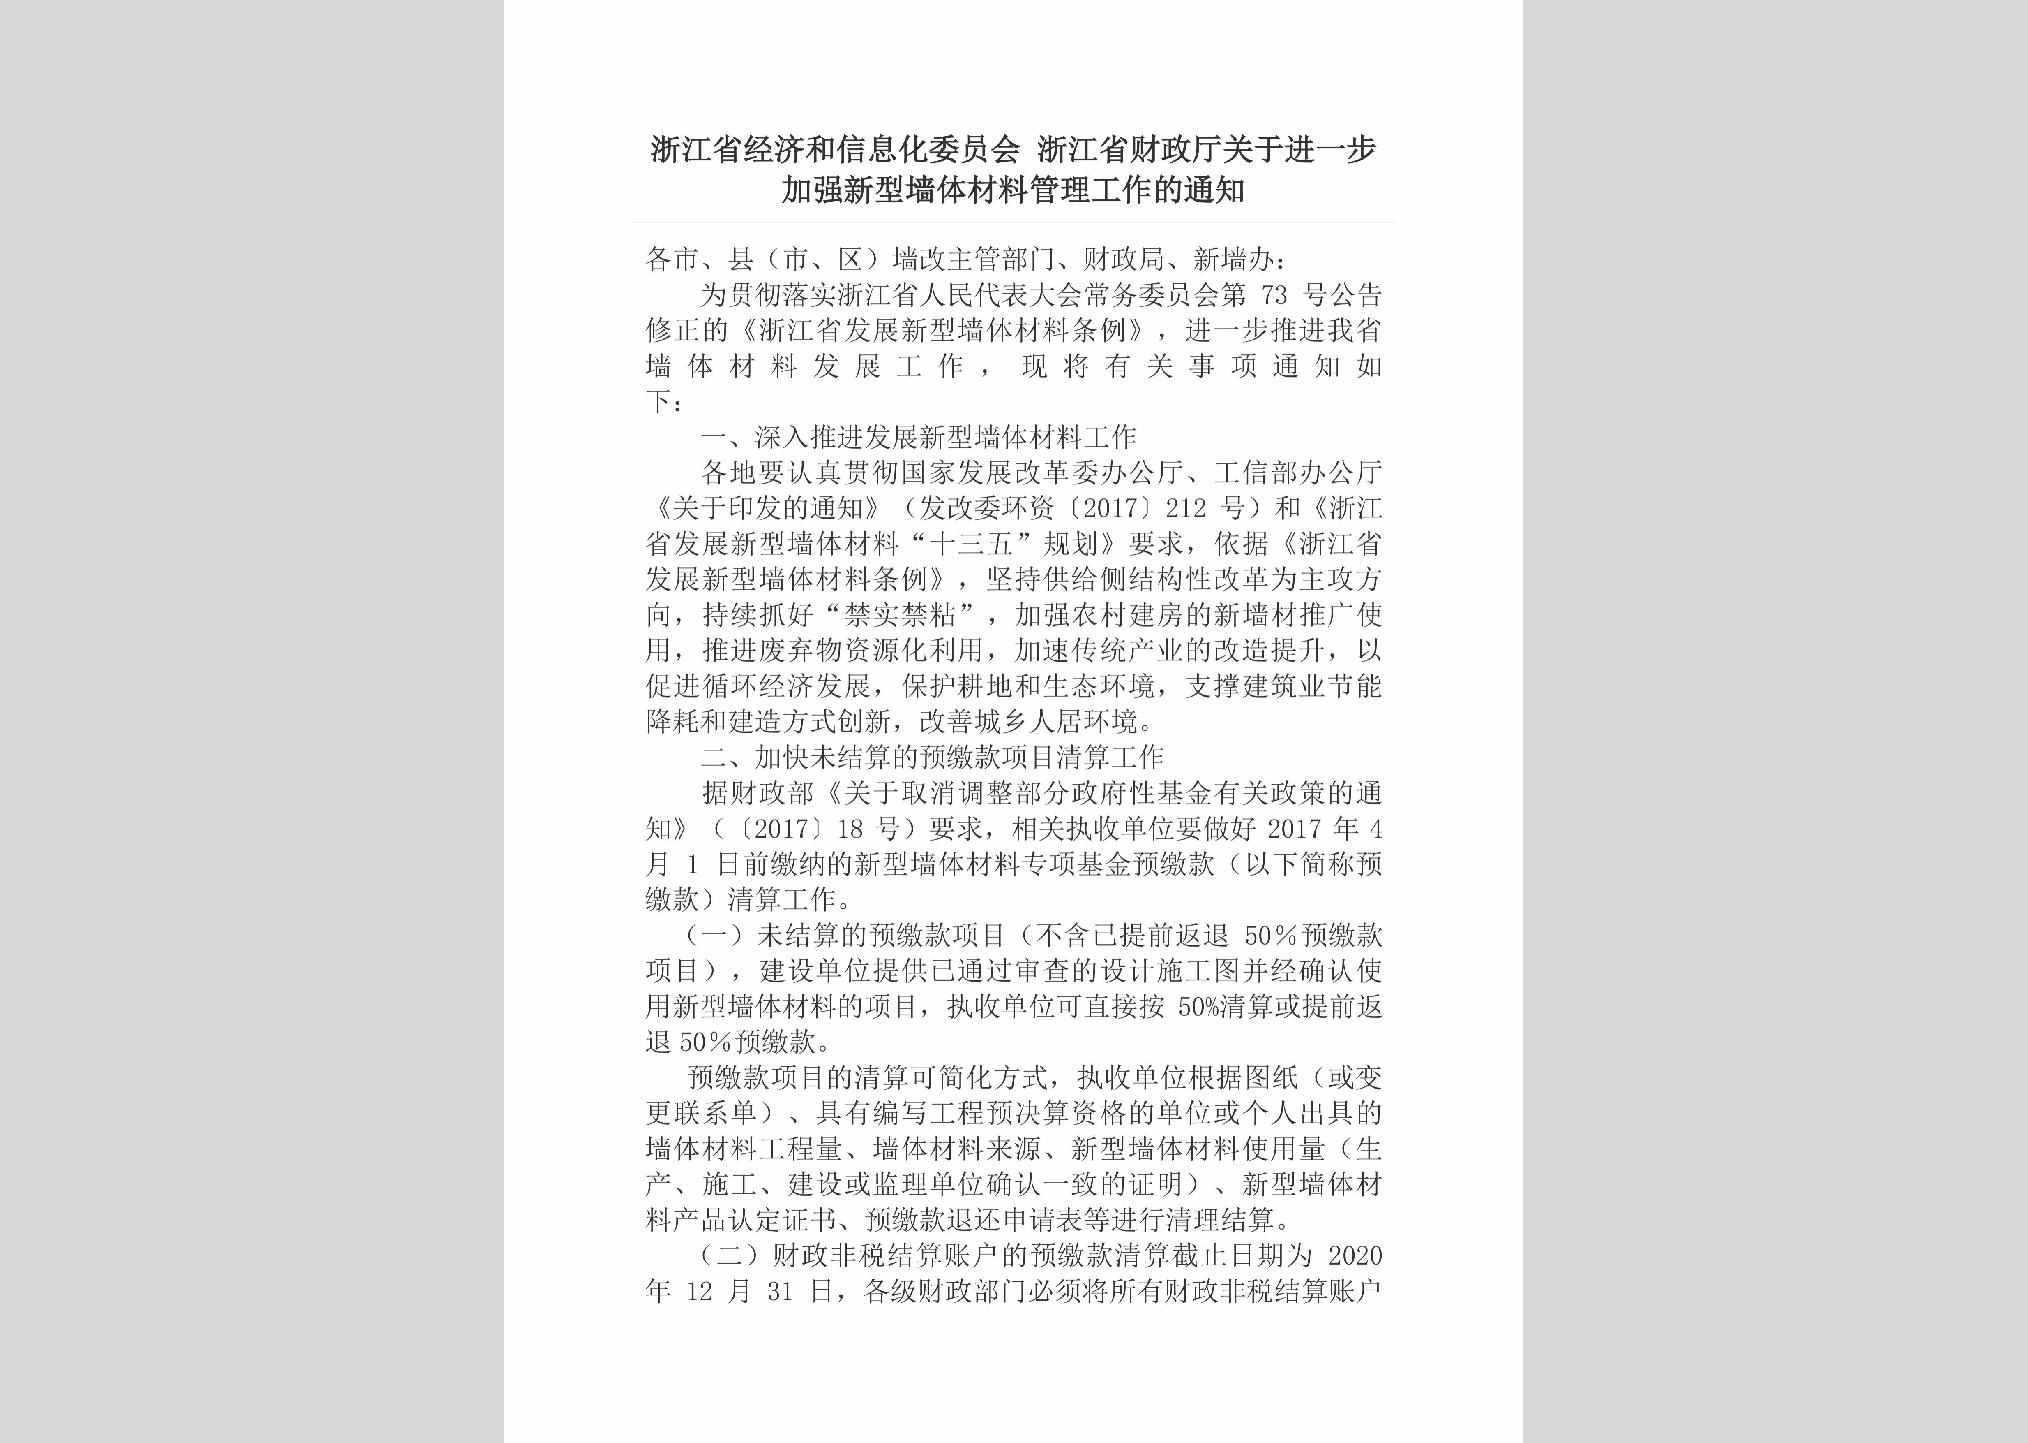 ZJ-CLGLGZTZ-2018：浙江省经济和信息化委员会浙江省财政厅关于进一步加强新型墙体材料管理工作的通知